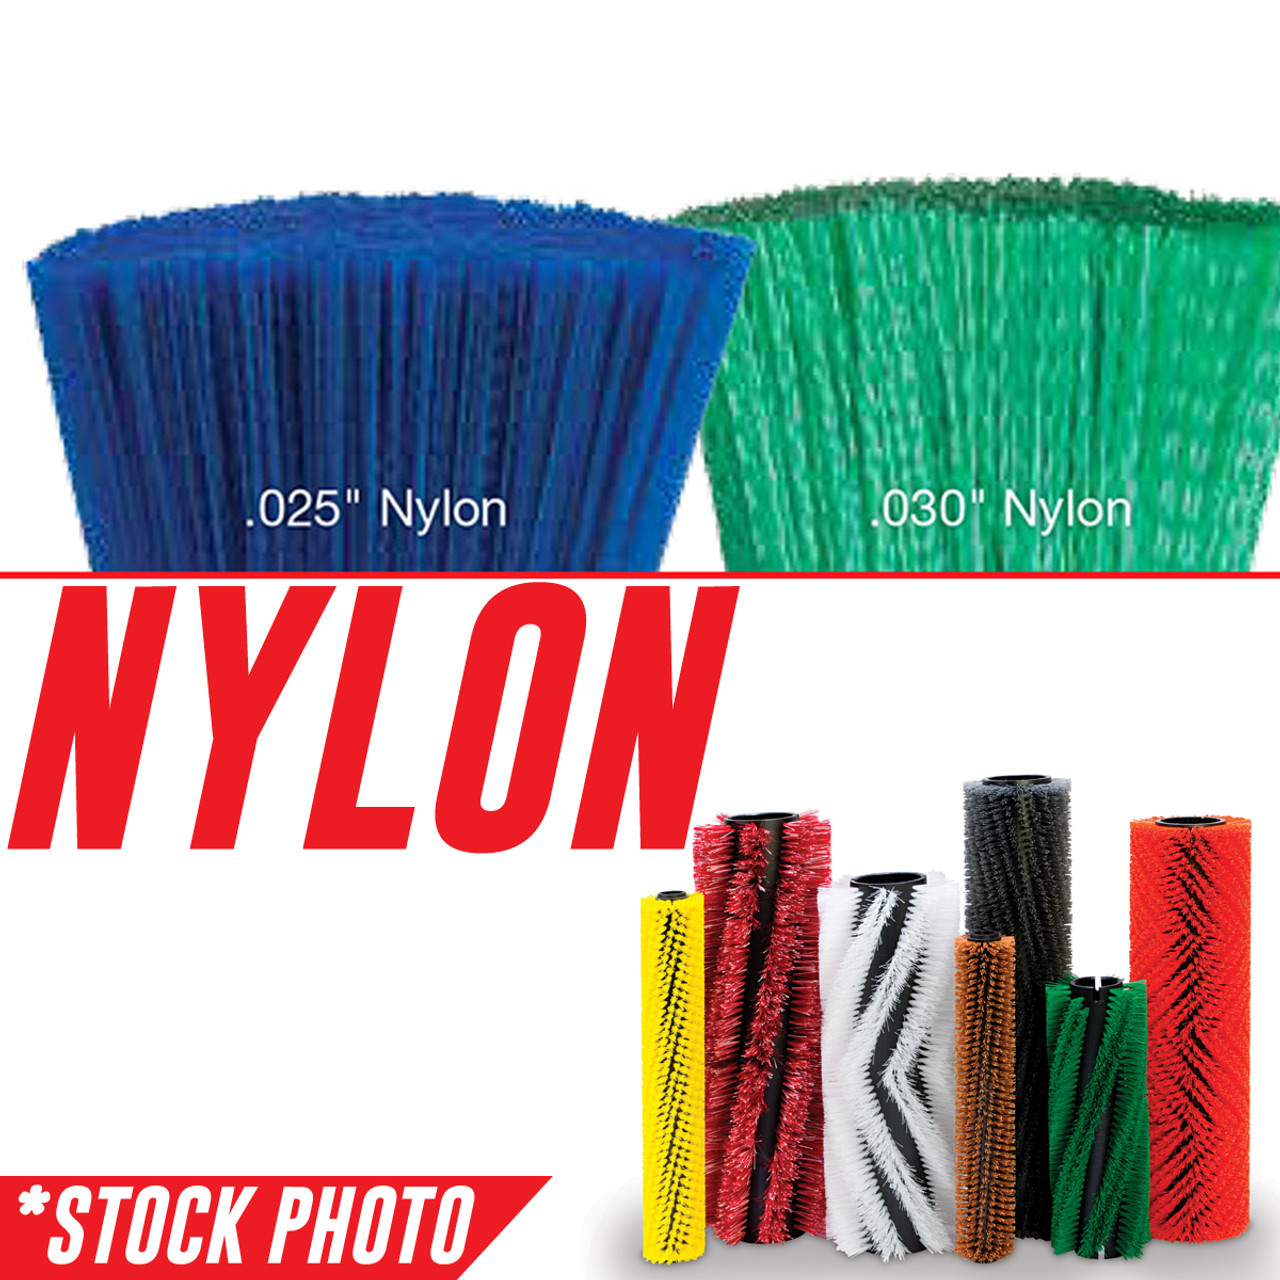 25-521N: 25" Cylindrical Brush 16 Single Row Nylon fits Tomcat Models 26, 290C, GTX 27, Magnum 27